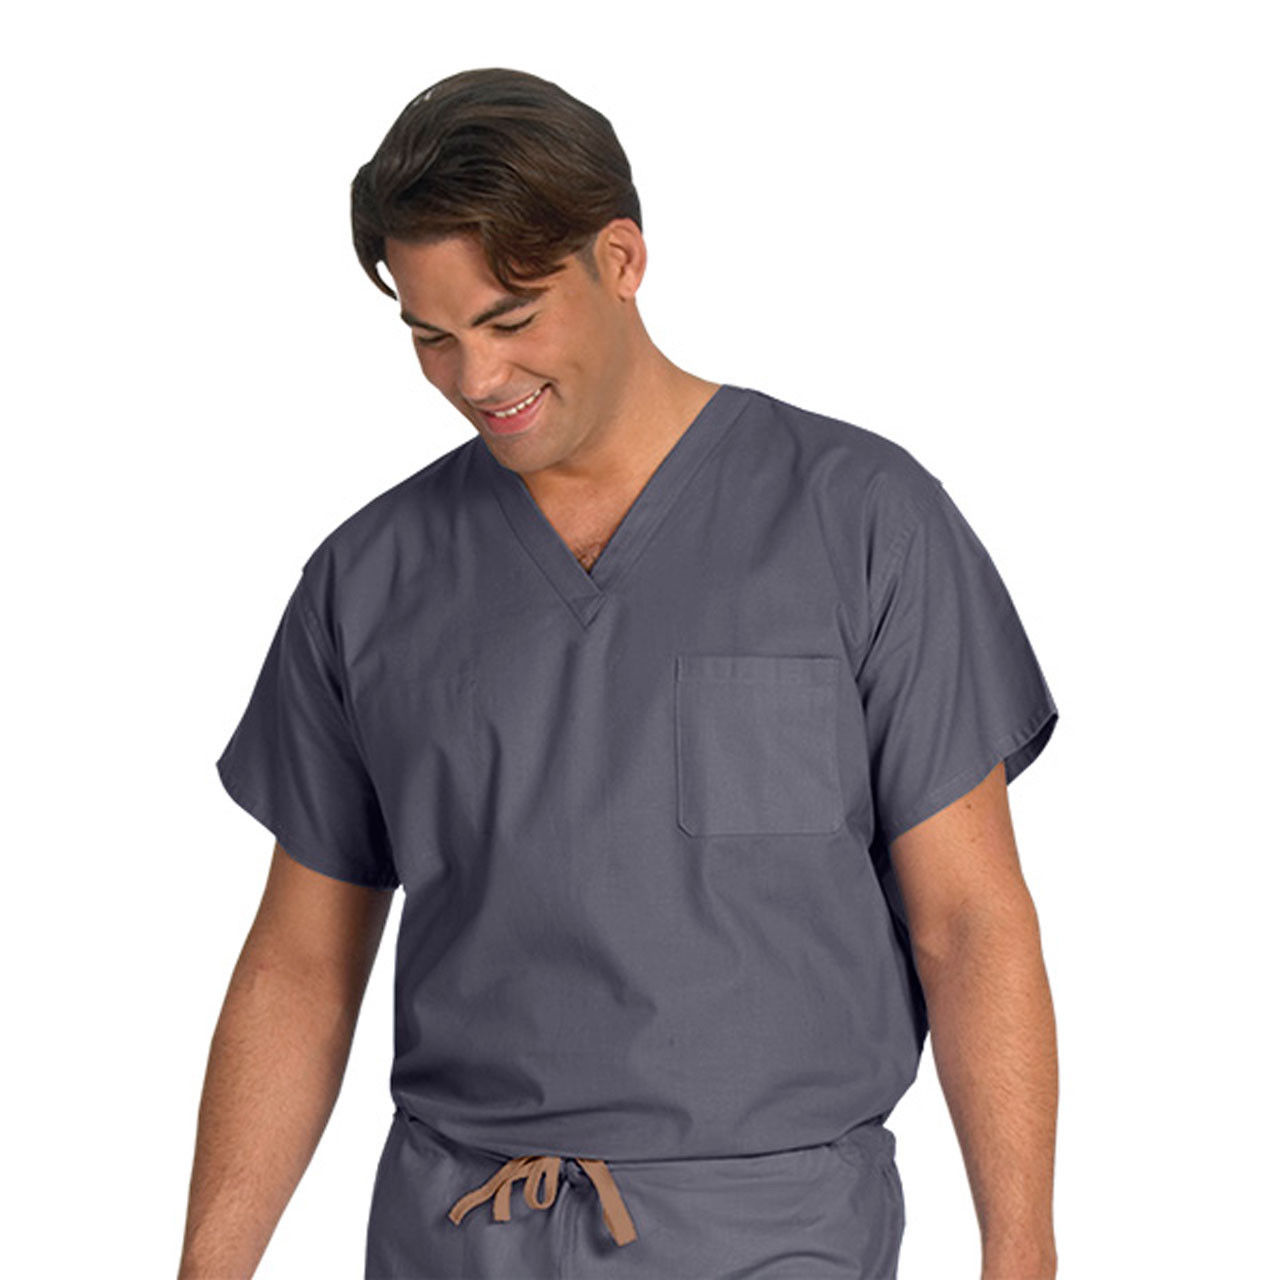 Does the dark gray scrubs set have a drawstring or elastic closure?